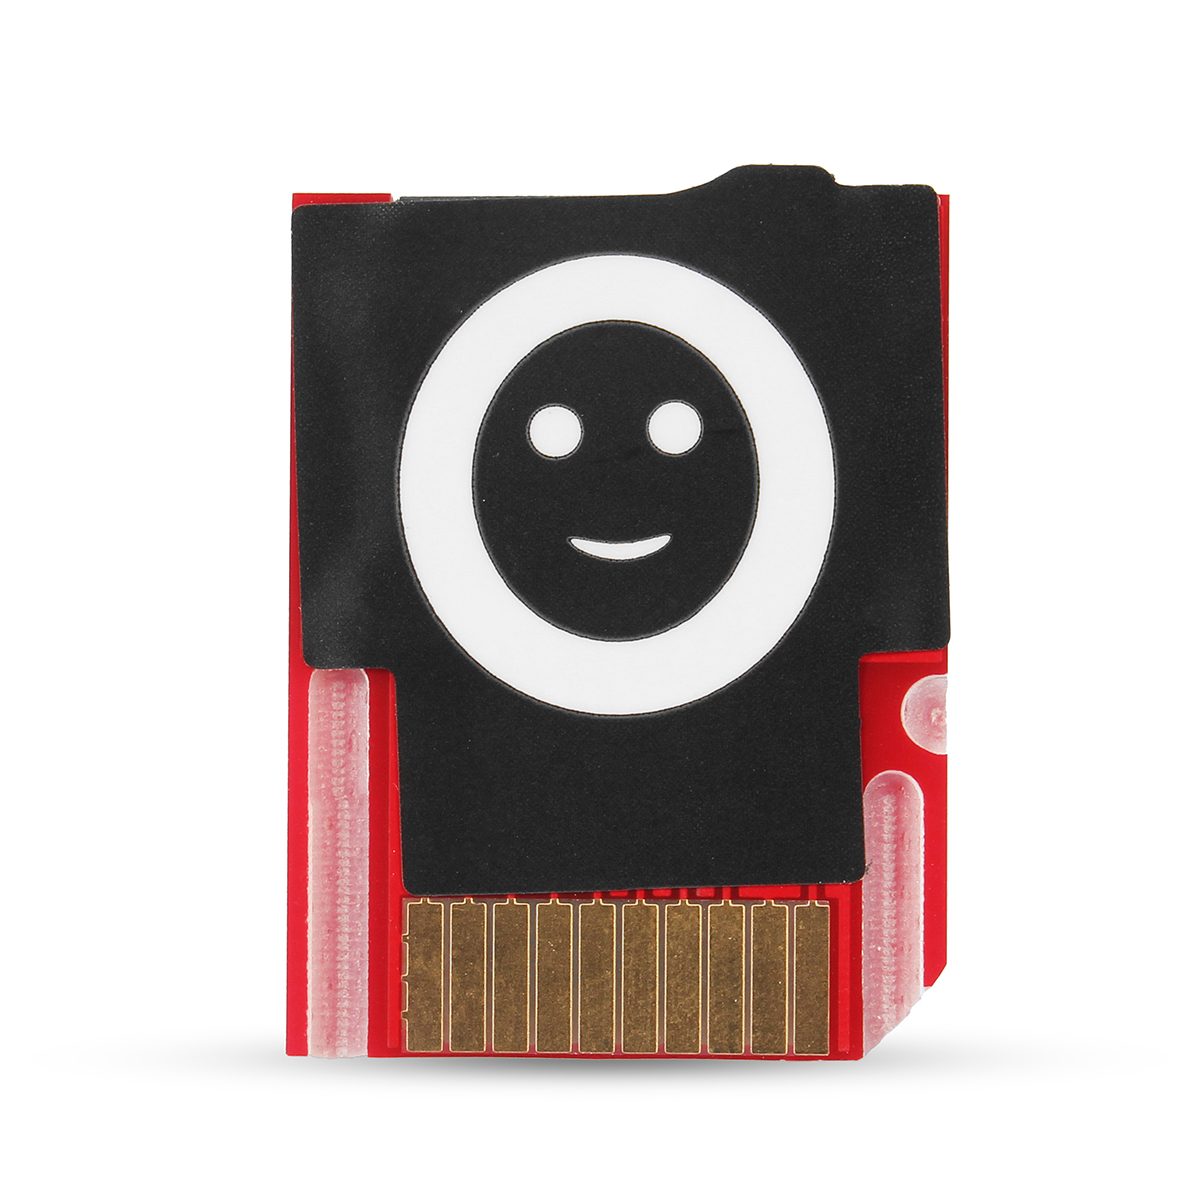 Mini-Game-Card-Cover-Adapter-For-PSVITA-SD2-Vita-PS-Vita-1000-2000-SD-Memory-Card-1207134-2